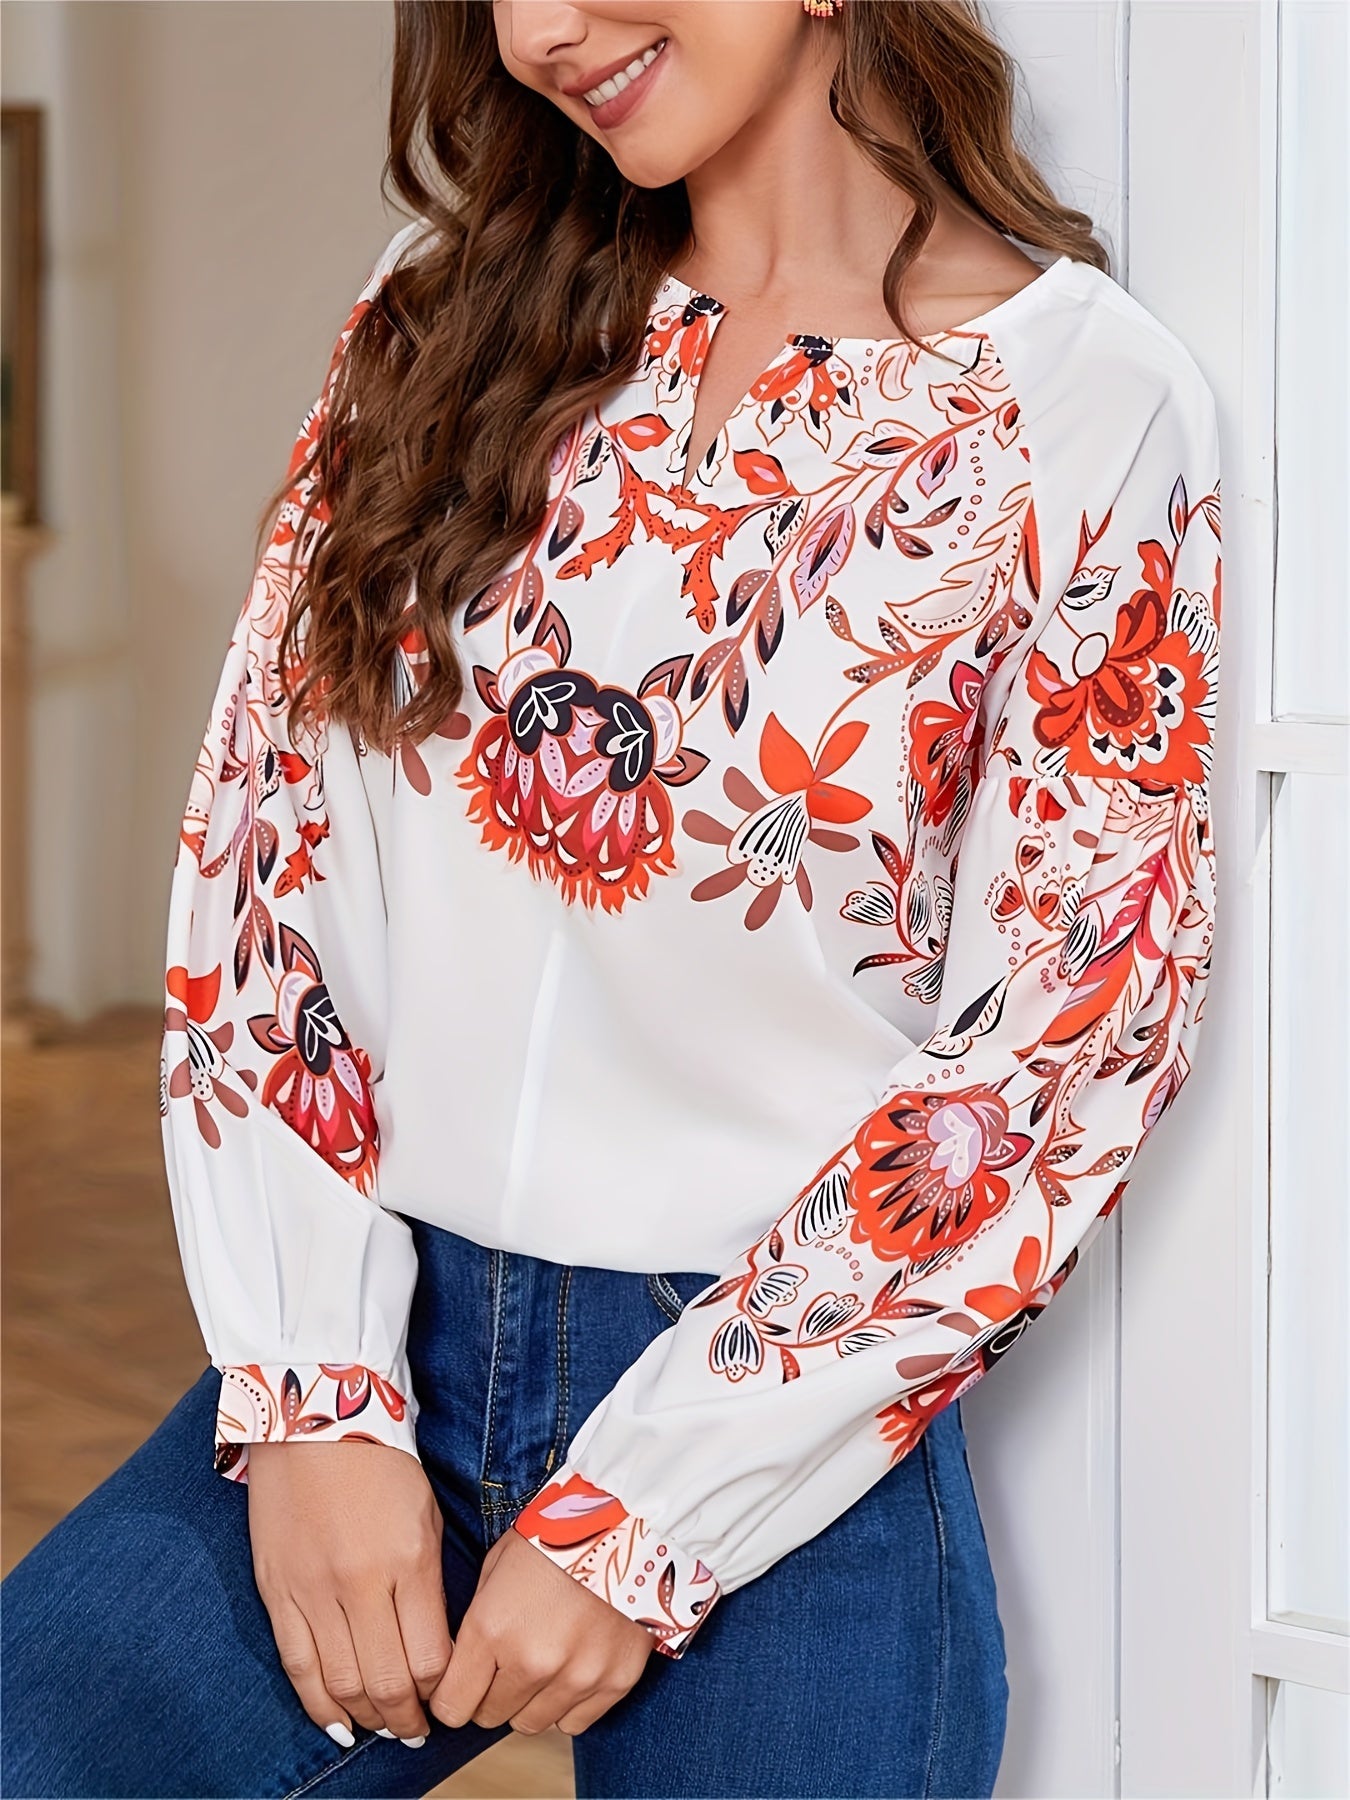 Vzyzv Floral Print Split Crew Neck Shirt, Boho Long Sleeve Shirt For Spring & Fall, Women's Clothing